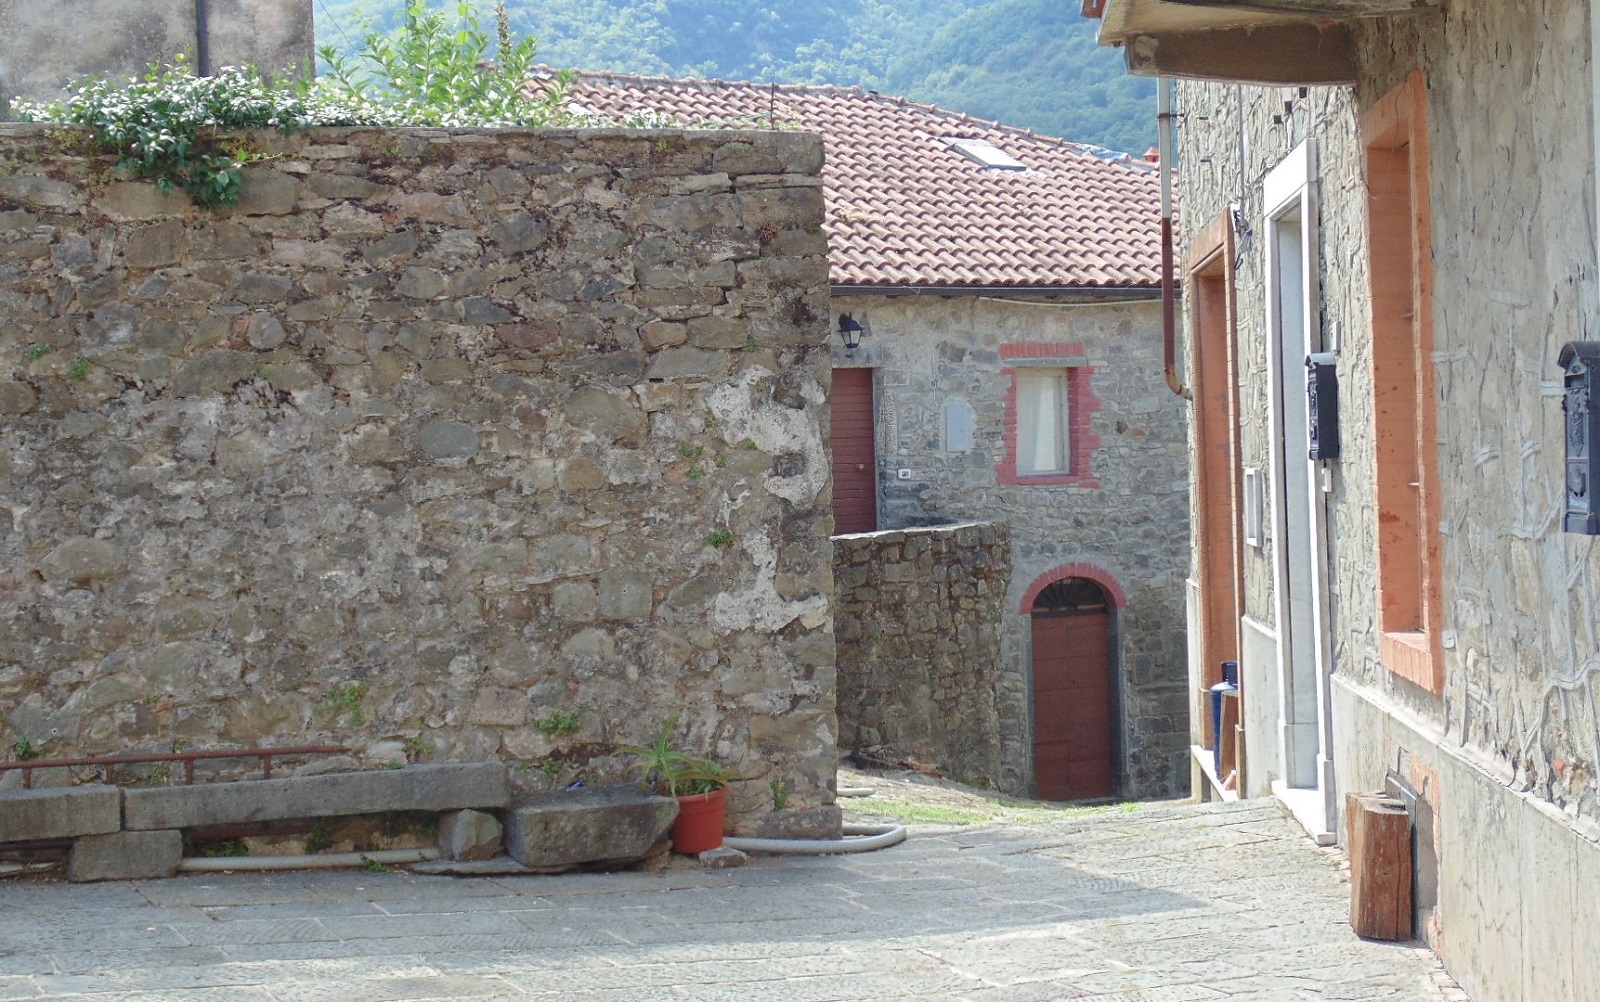 The village of Mulazzo